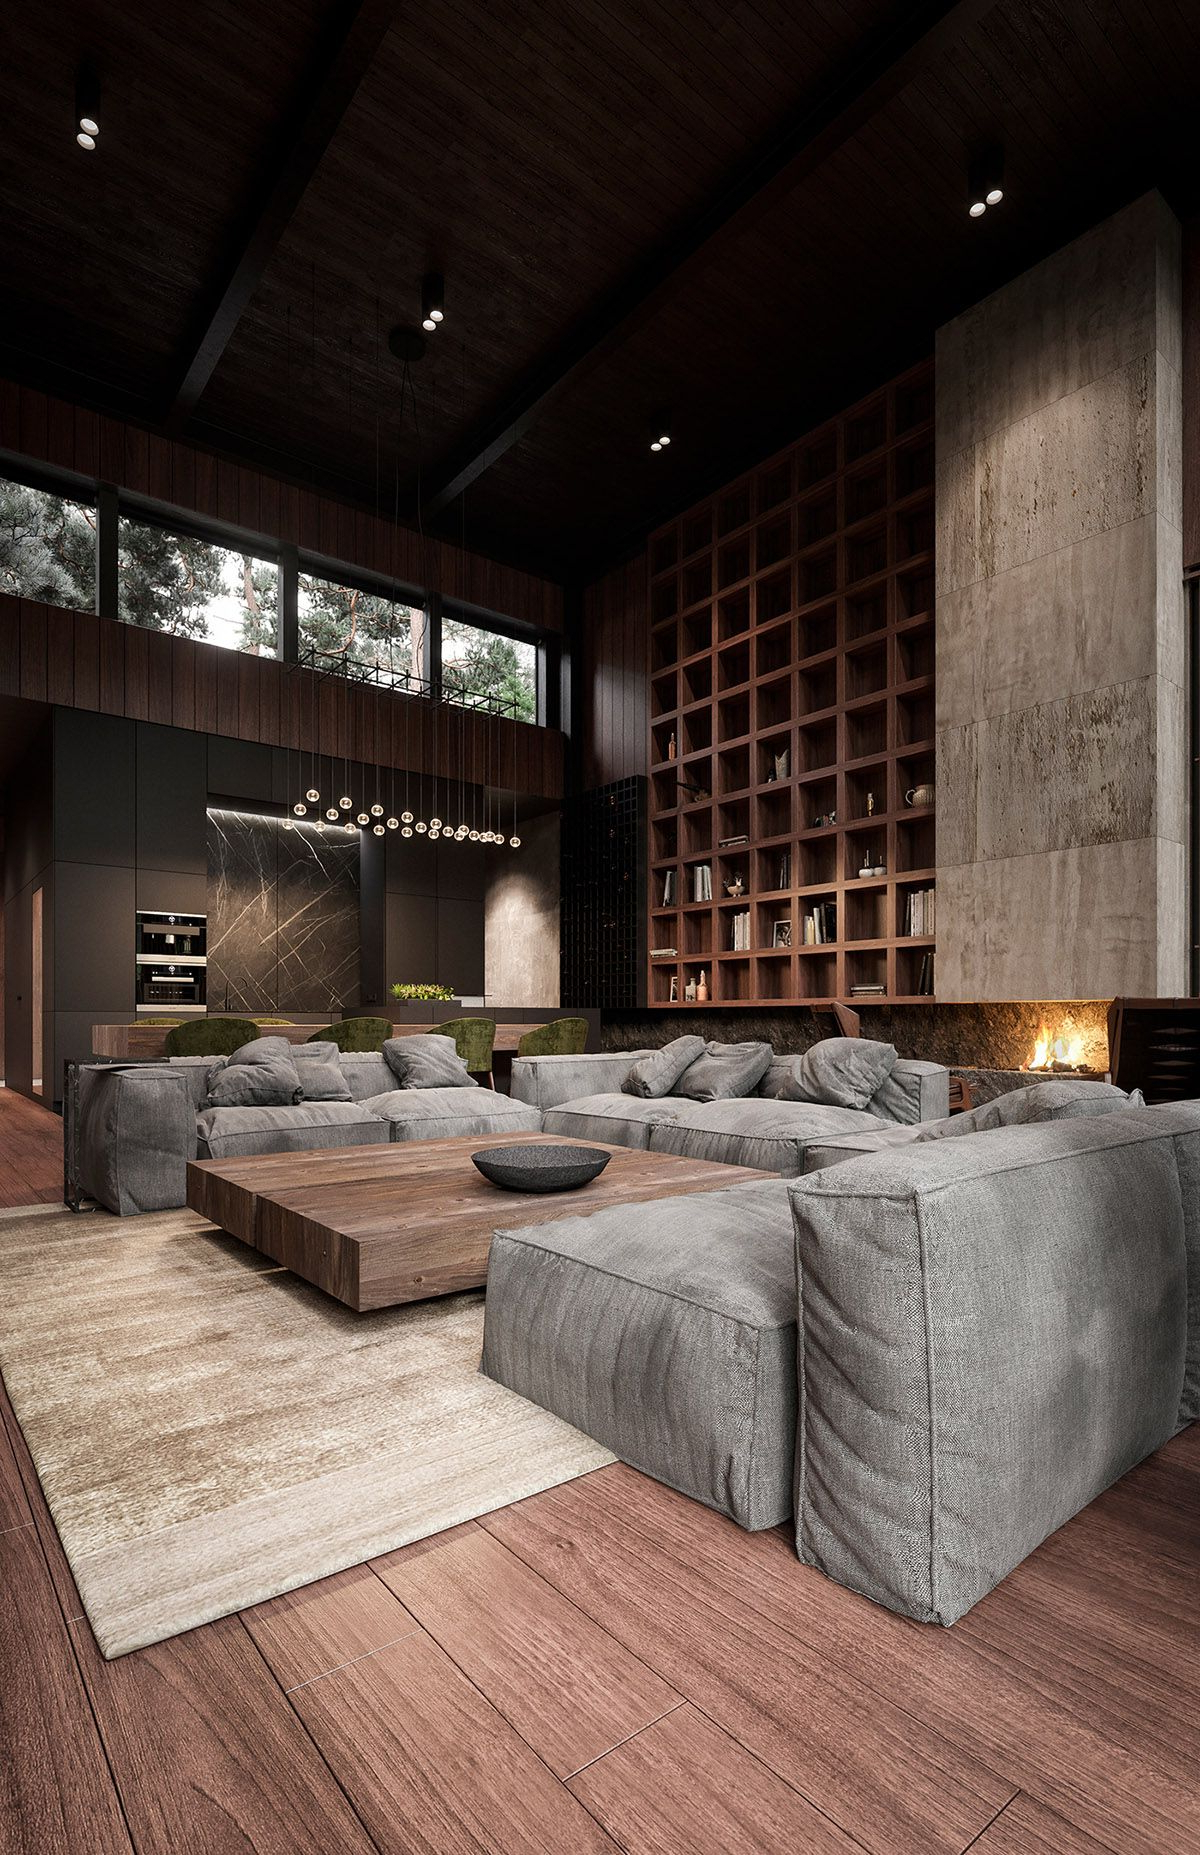 Rich Exquisite Modern Rustic Home Interior Minimalism